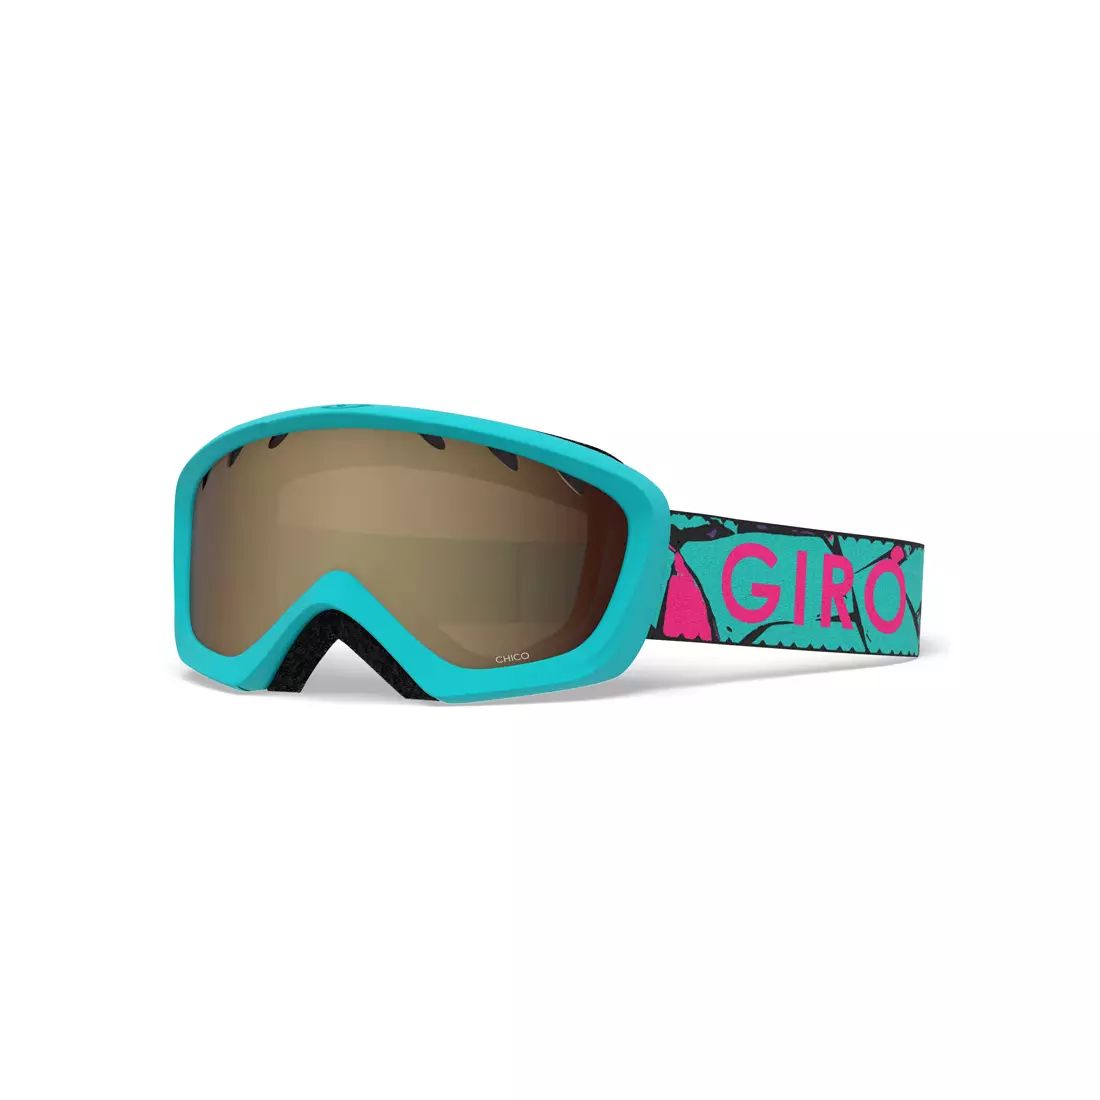 Juniorské lyžařské / snowboardové brýle CHICO GLACIER ROCK GR-7094690